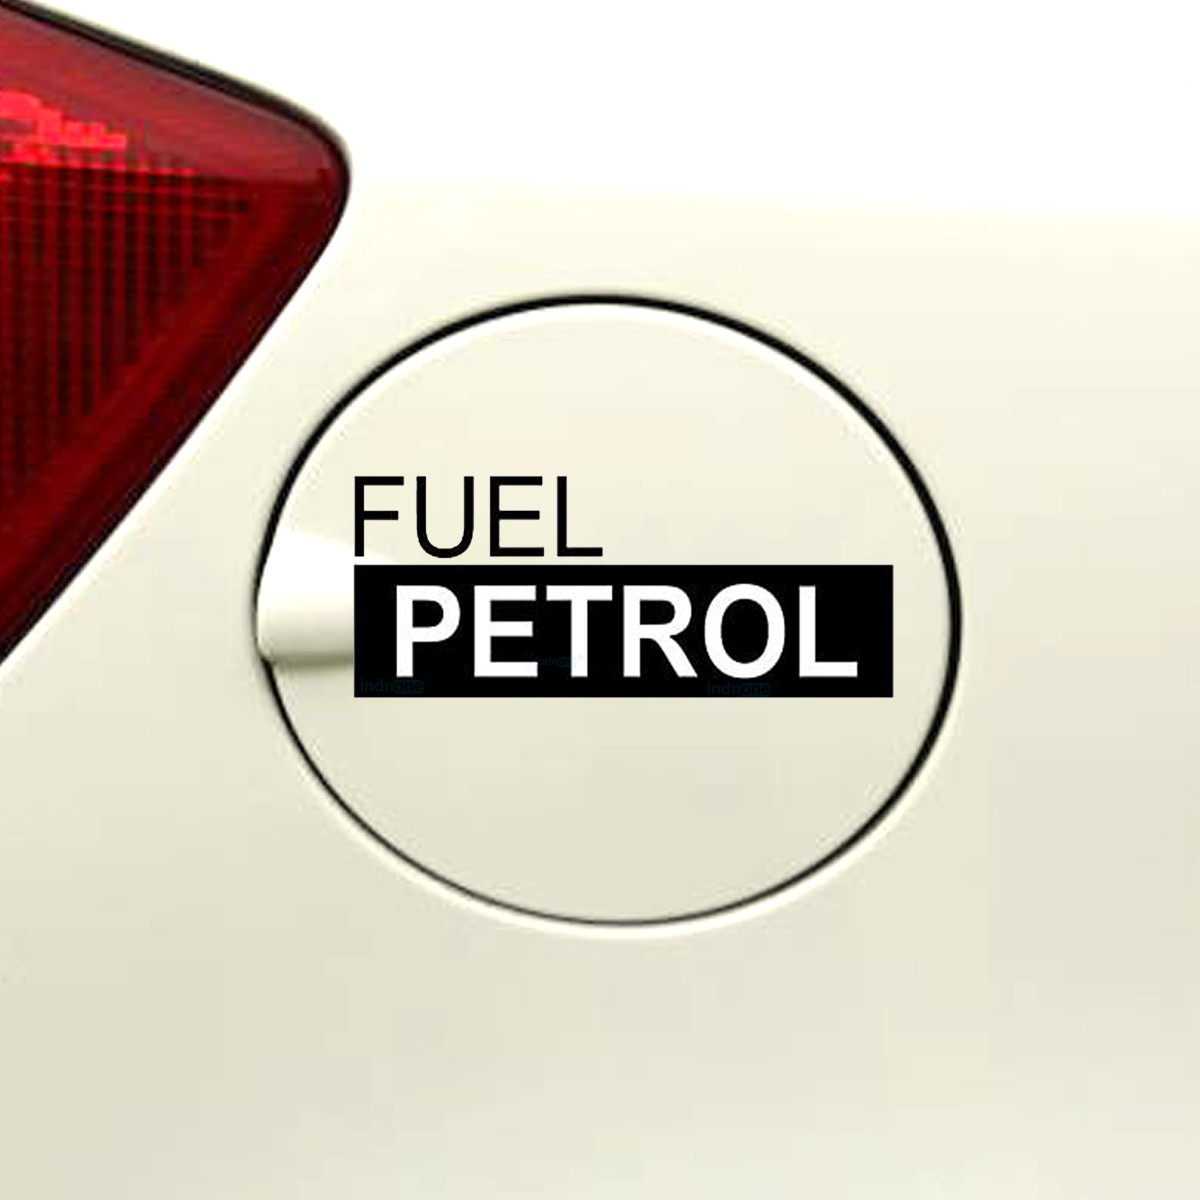 indnone® Petrol Sticker for Car. Car Sticker Stylish Fuel Lid | Black Color Standard Size